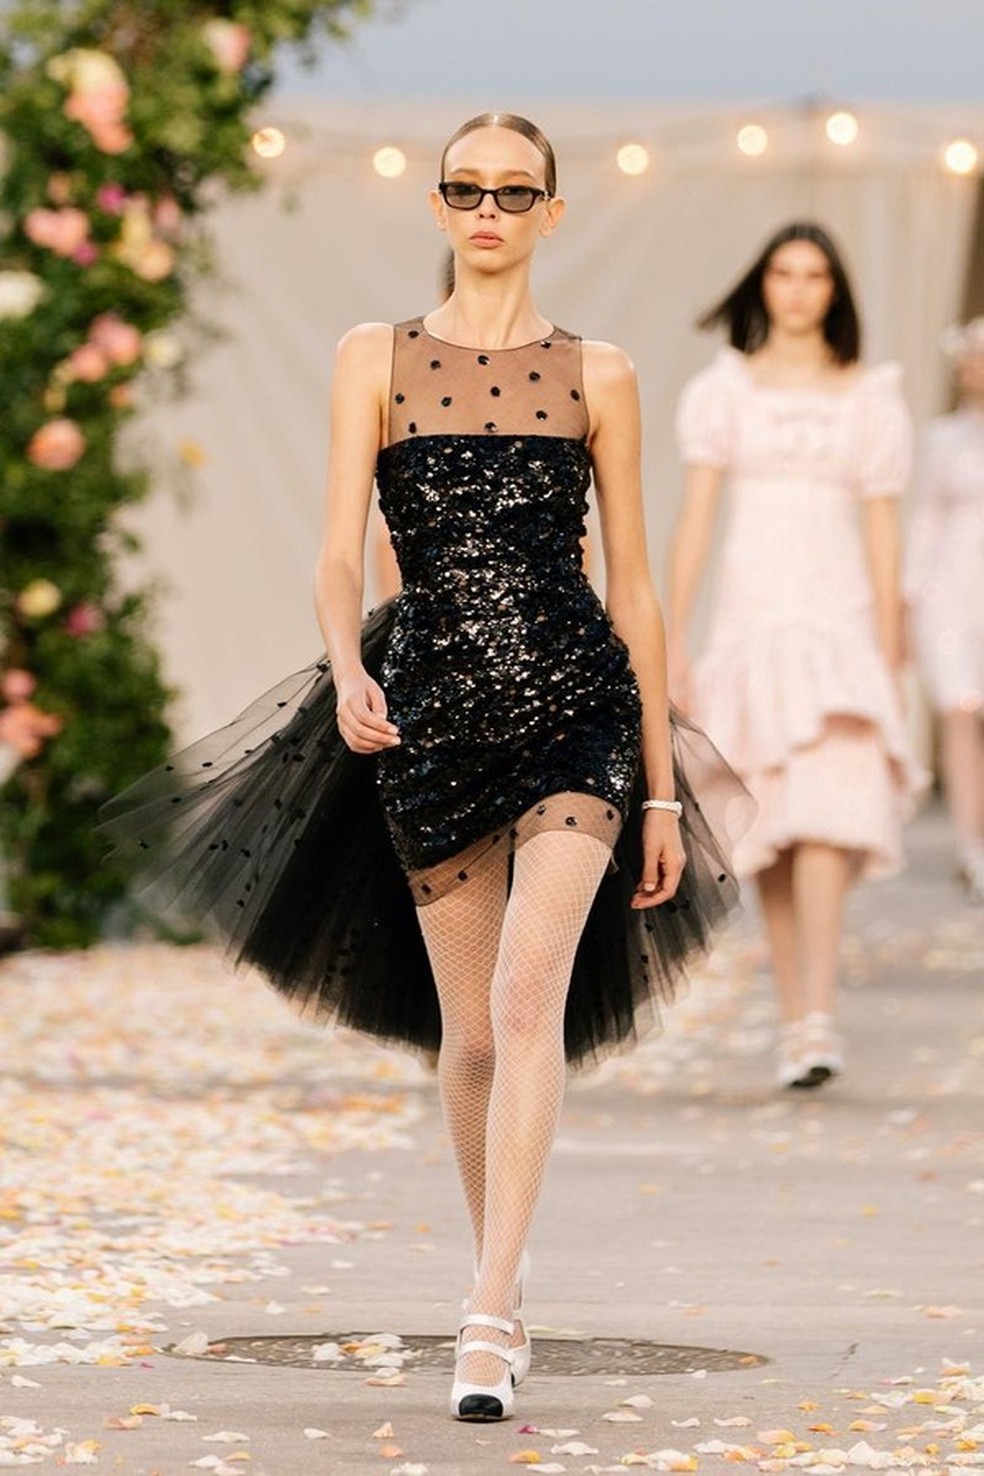 Saia de tule é tendência nas passarelas (Foto: Chanel) — Foto: Glamour